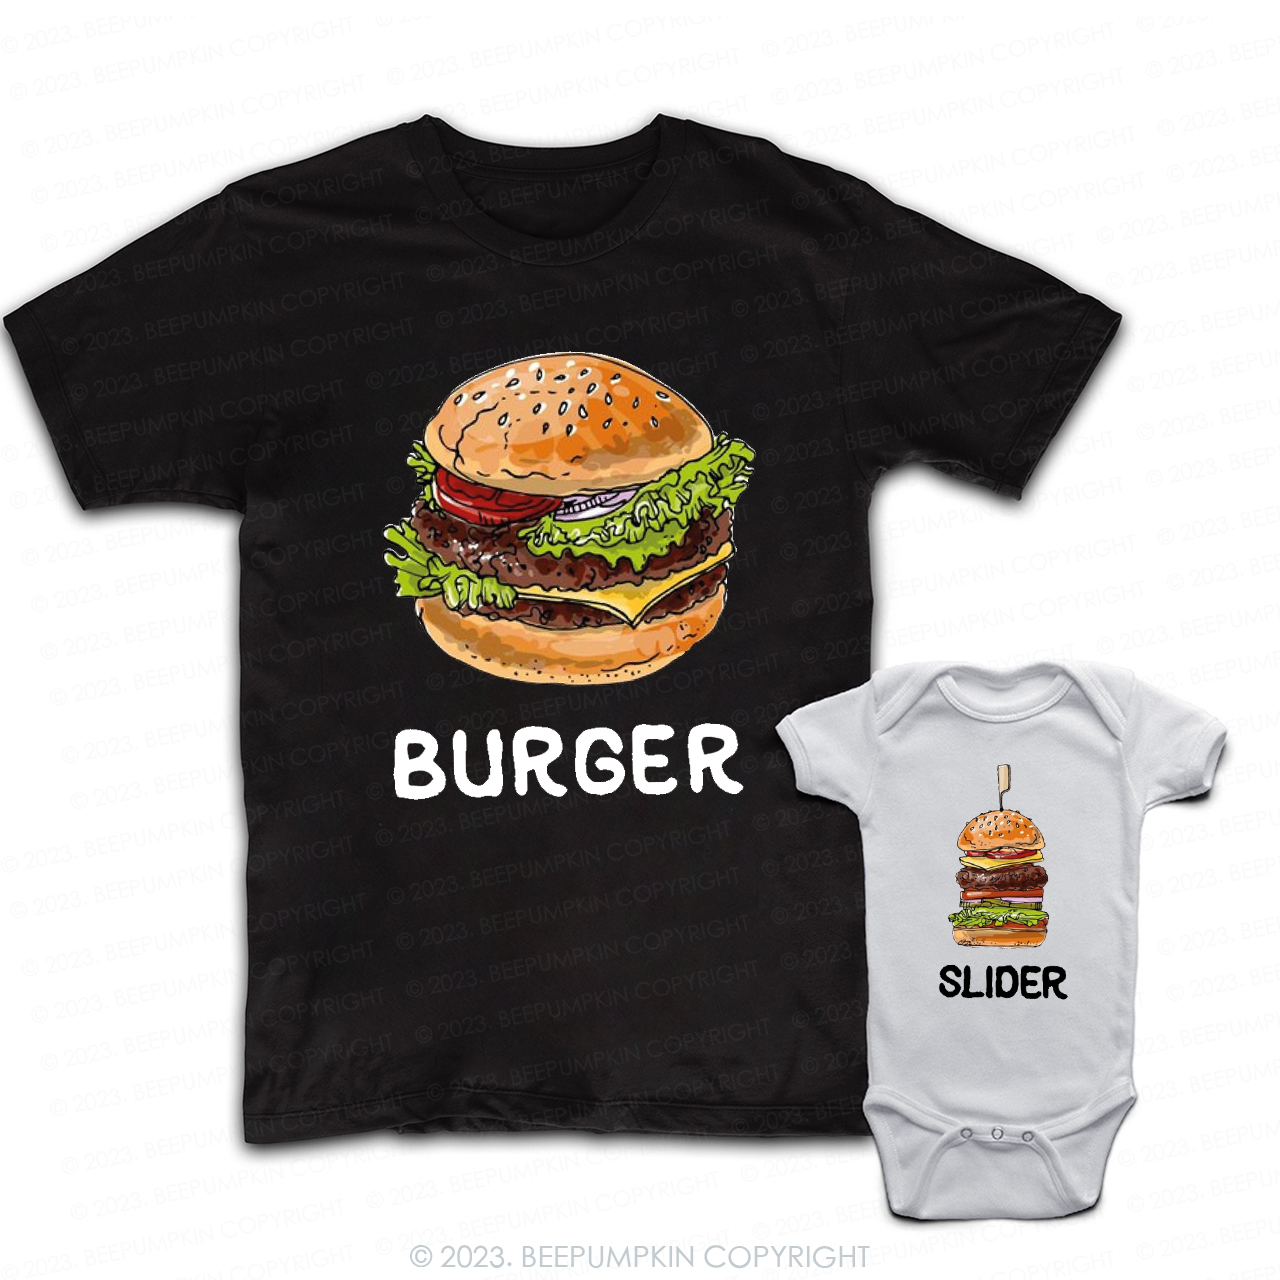 Burger And Slider Dad & Me Matching T-Shirts